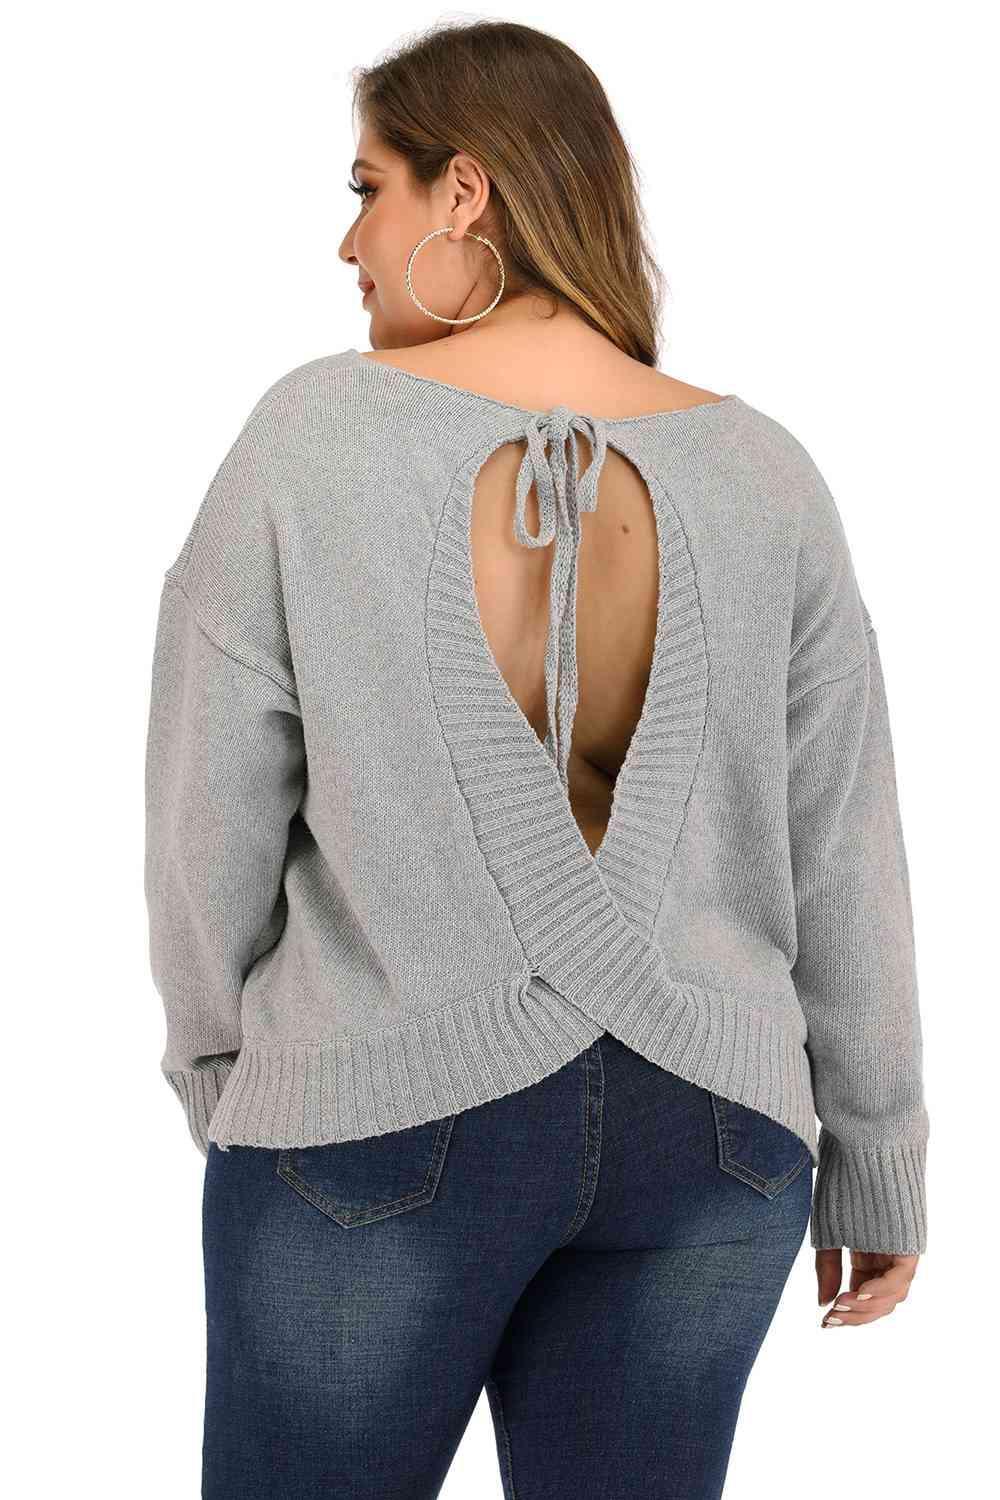 Cutout Tie Back Plus Size V Neck Pullover Sweater - MXSTUDIO.COM